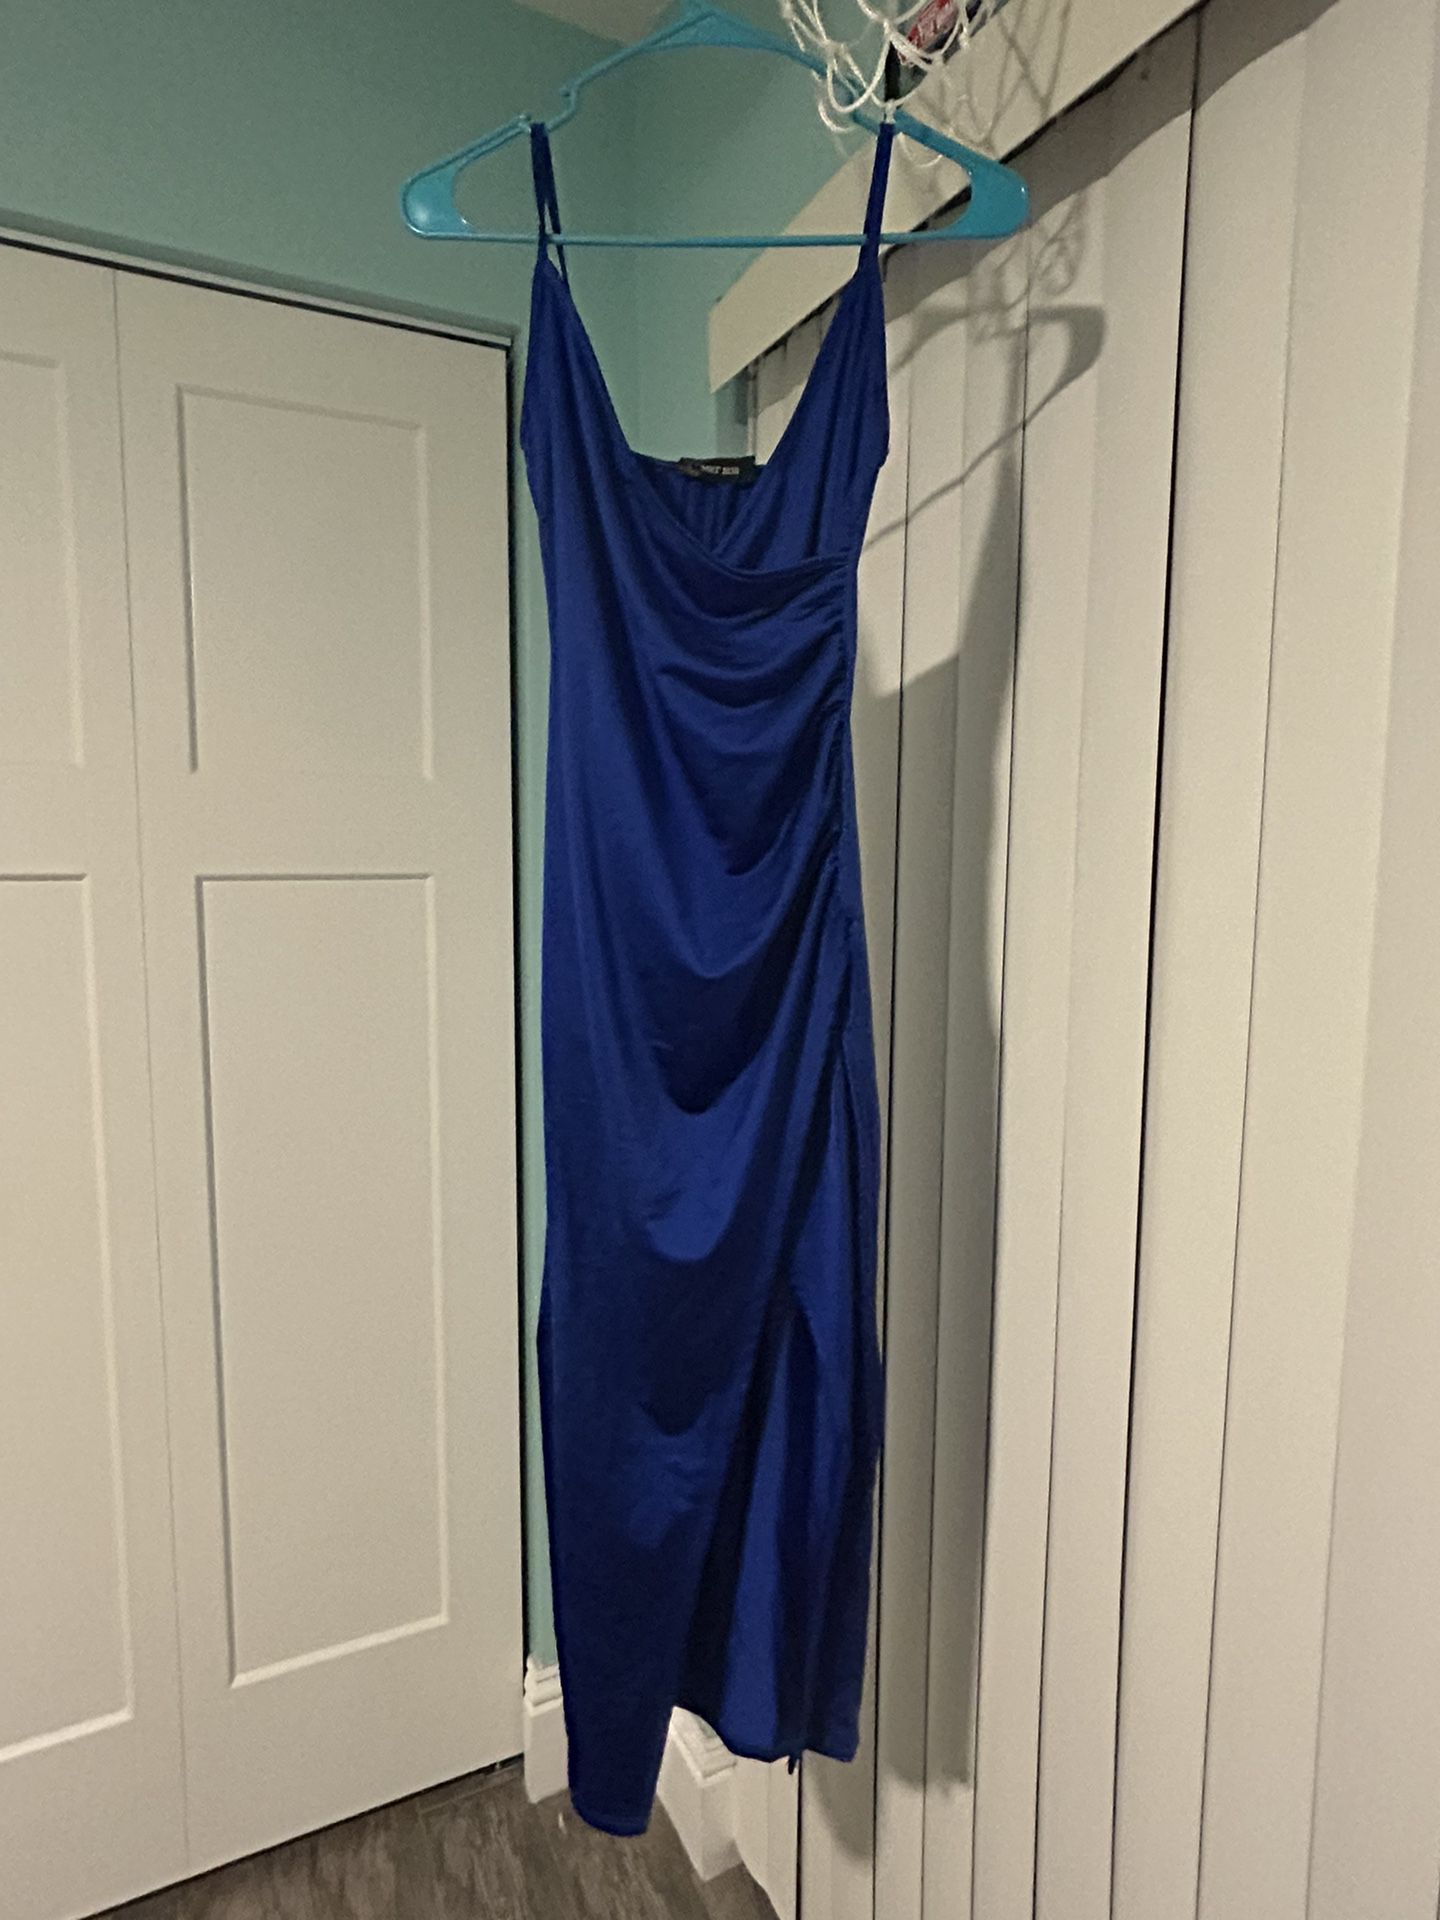 Royal blue silk dress